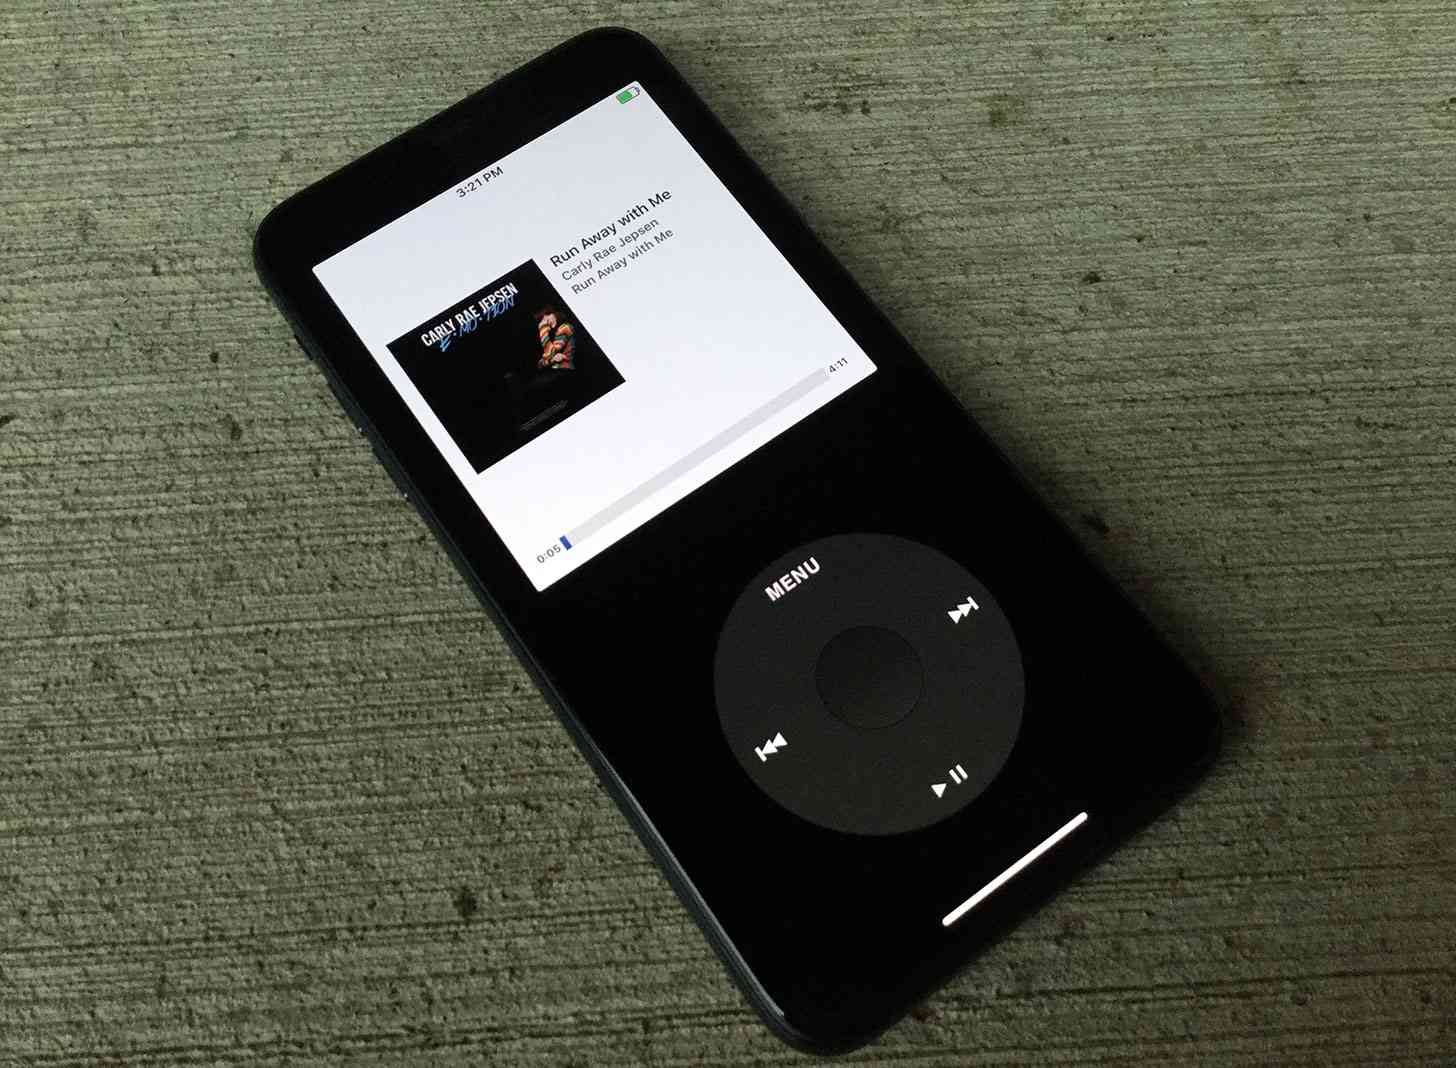 Rewound app turns iPhone into iPod